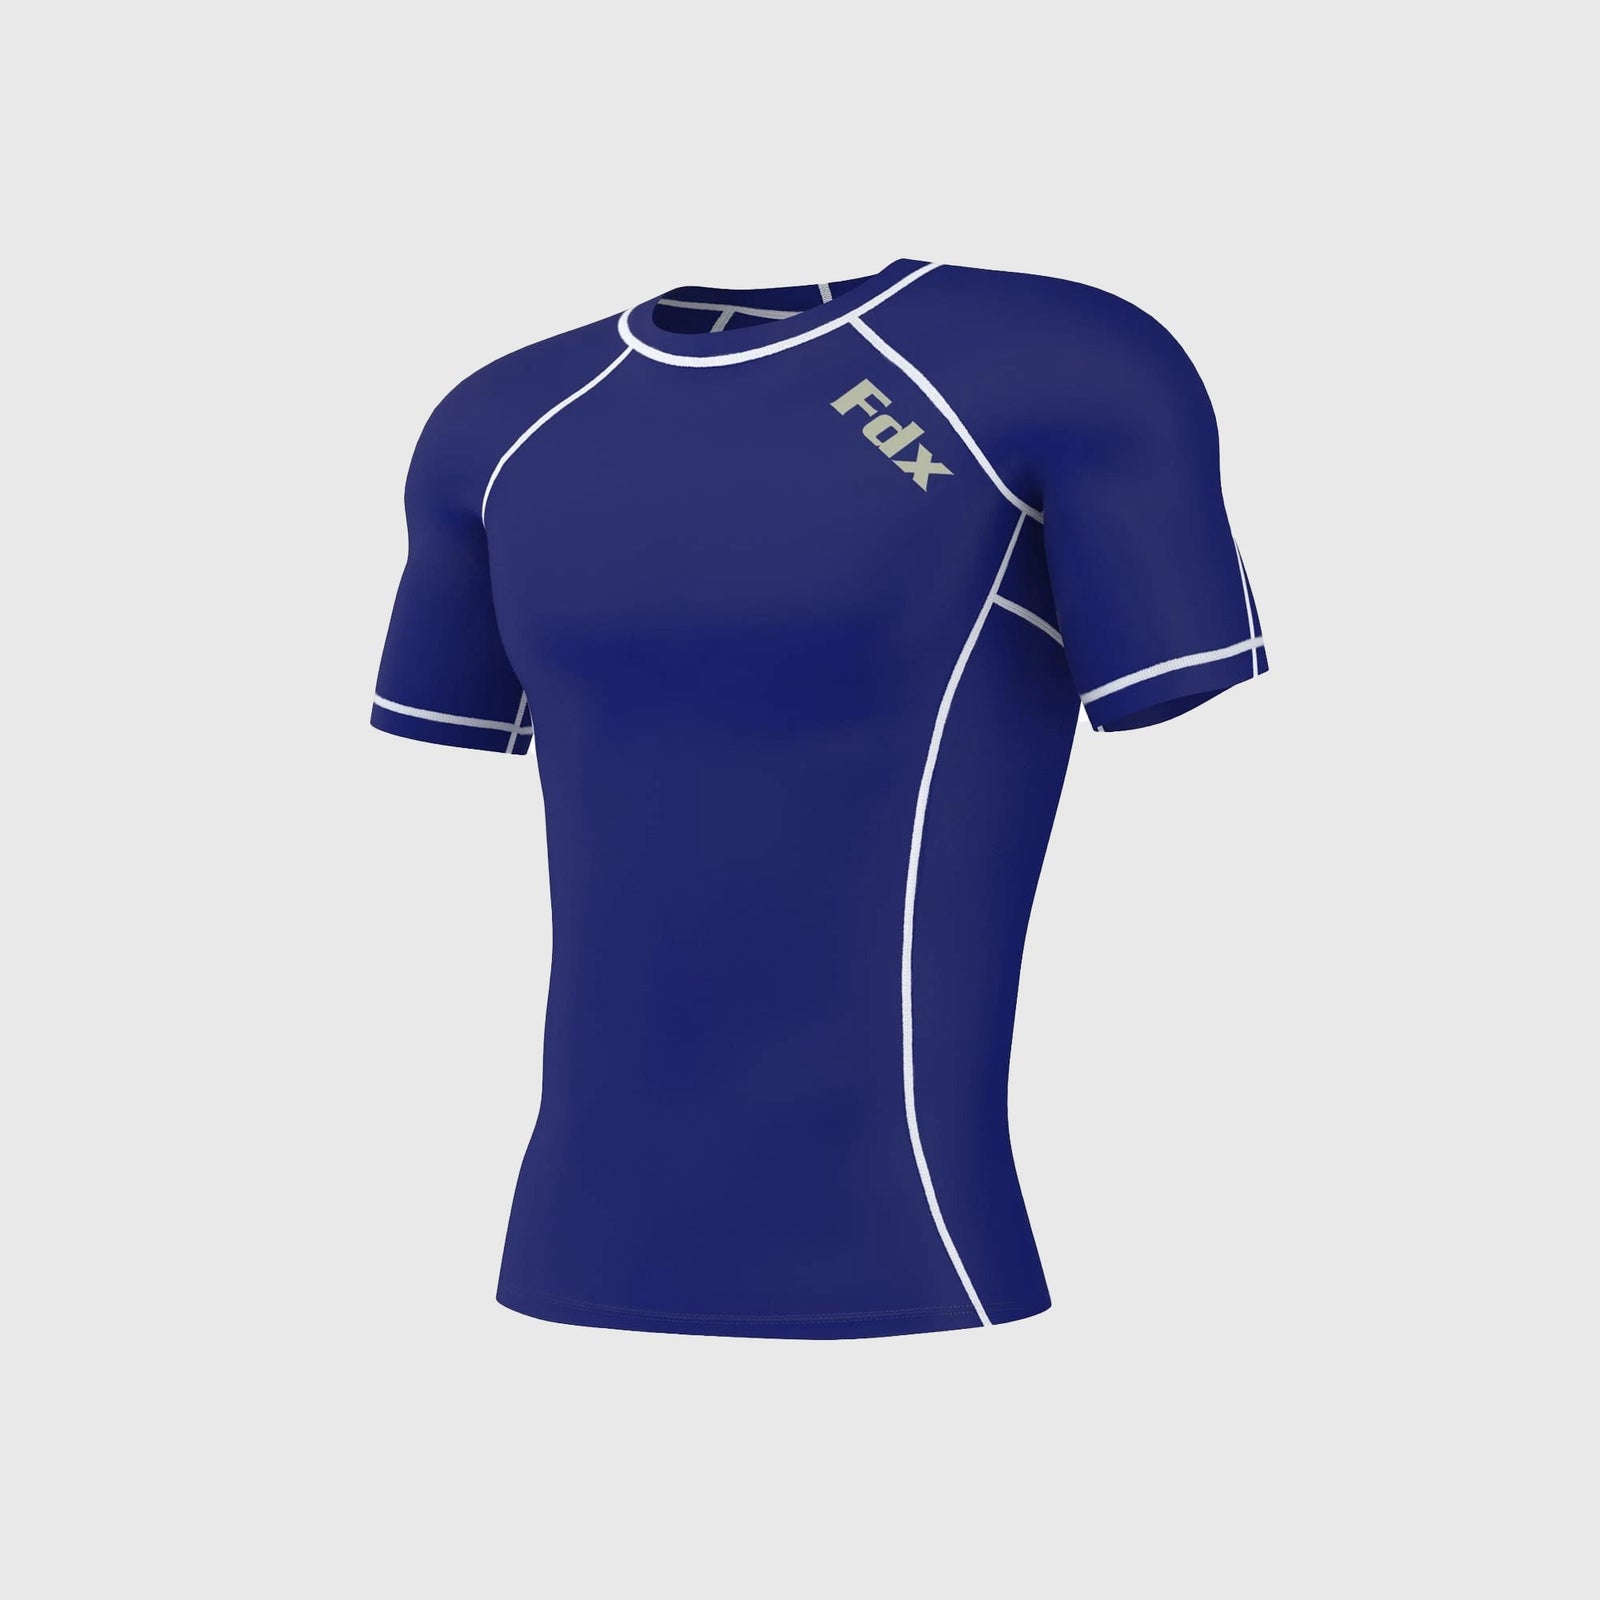 Fdx Monarch Women's Base Layer Compression Shirt Blue